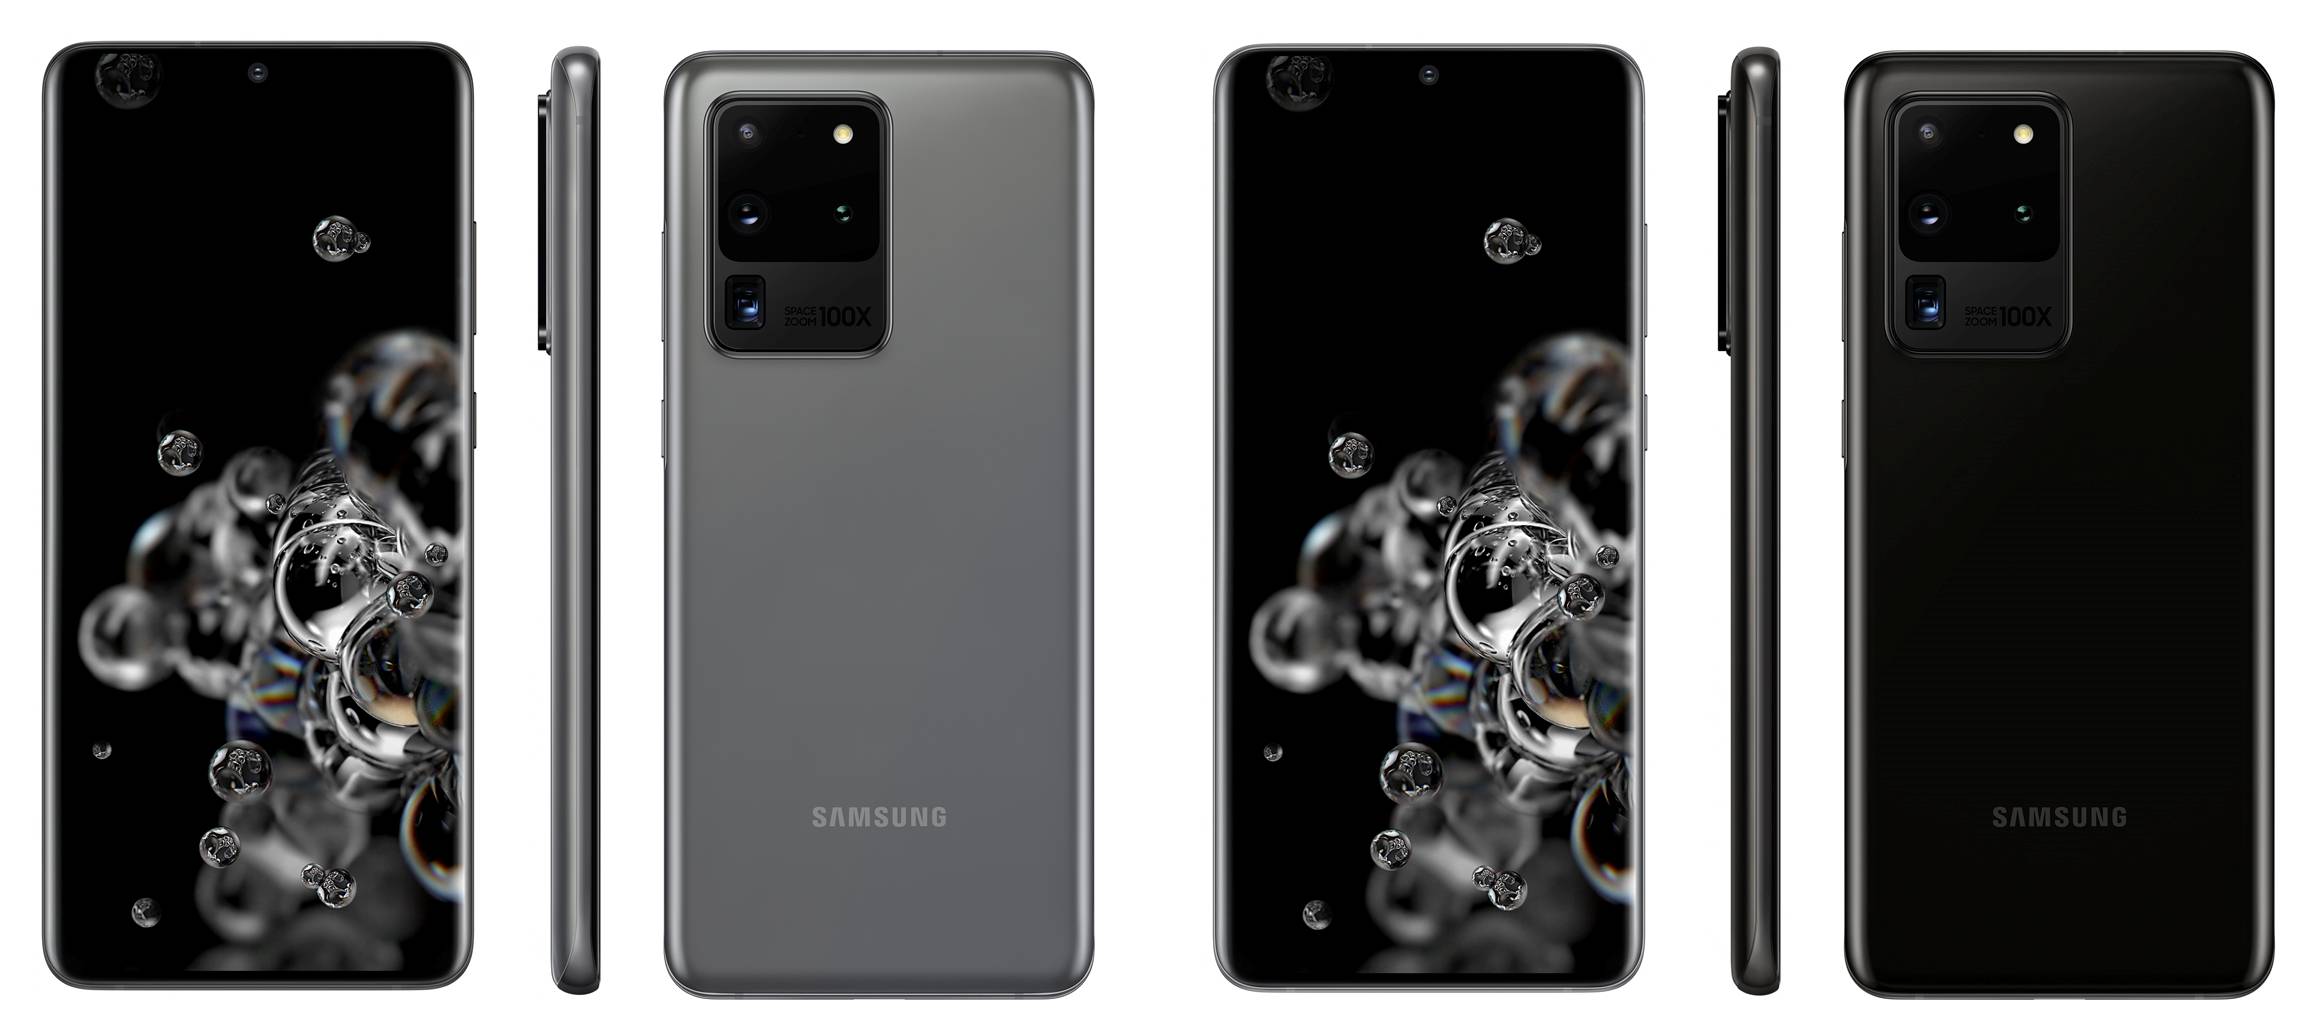 Images de presse officielles du Samsung GALAXY S20 Ultra